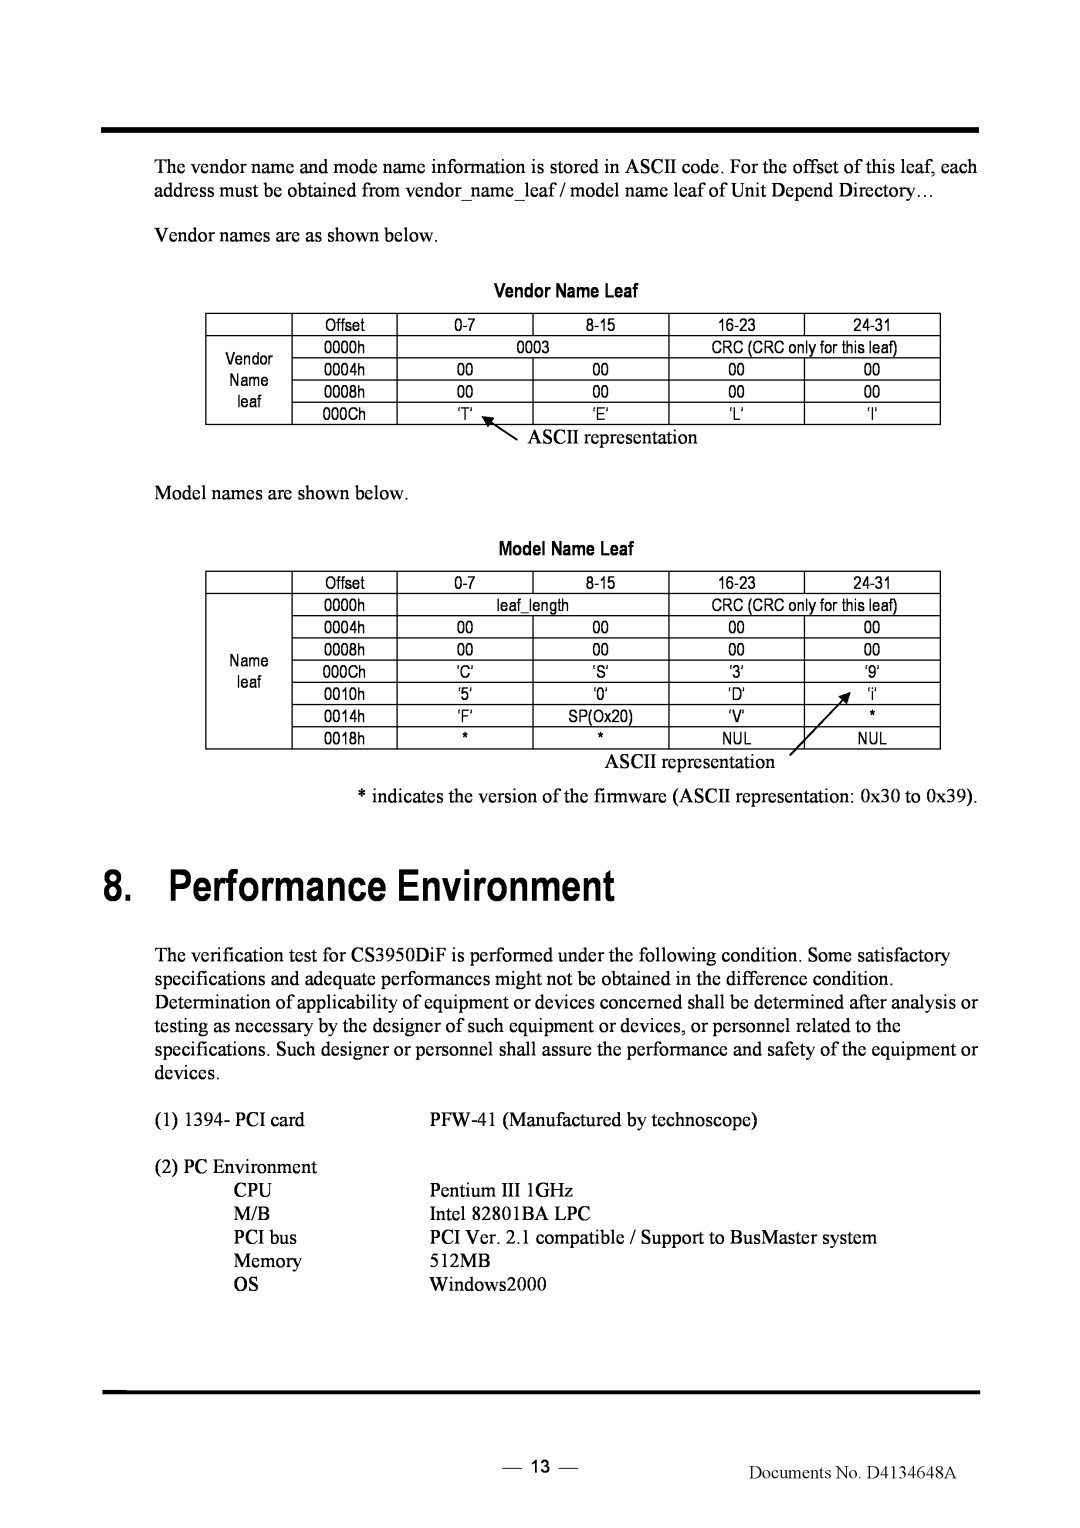 Toshiba CS3950DIF manual Performance Environment 